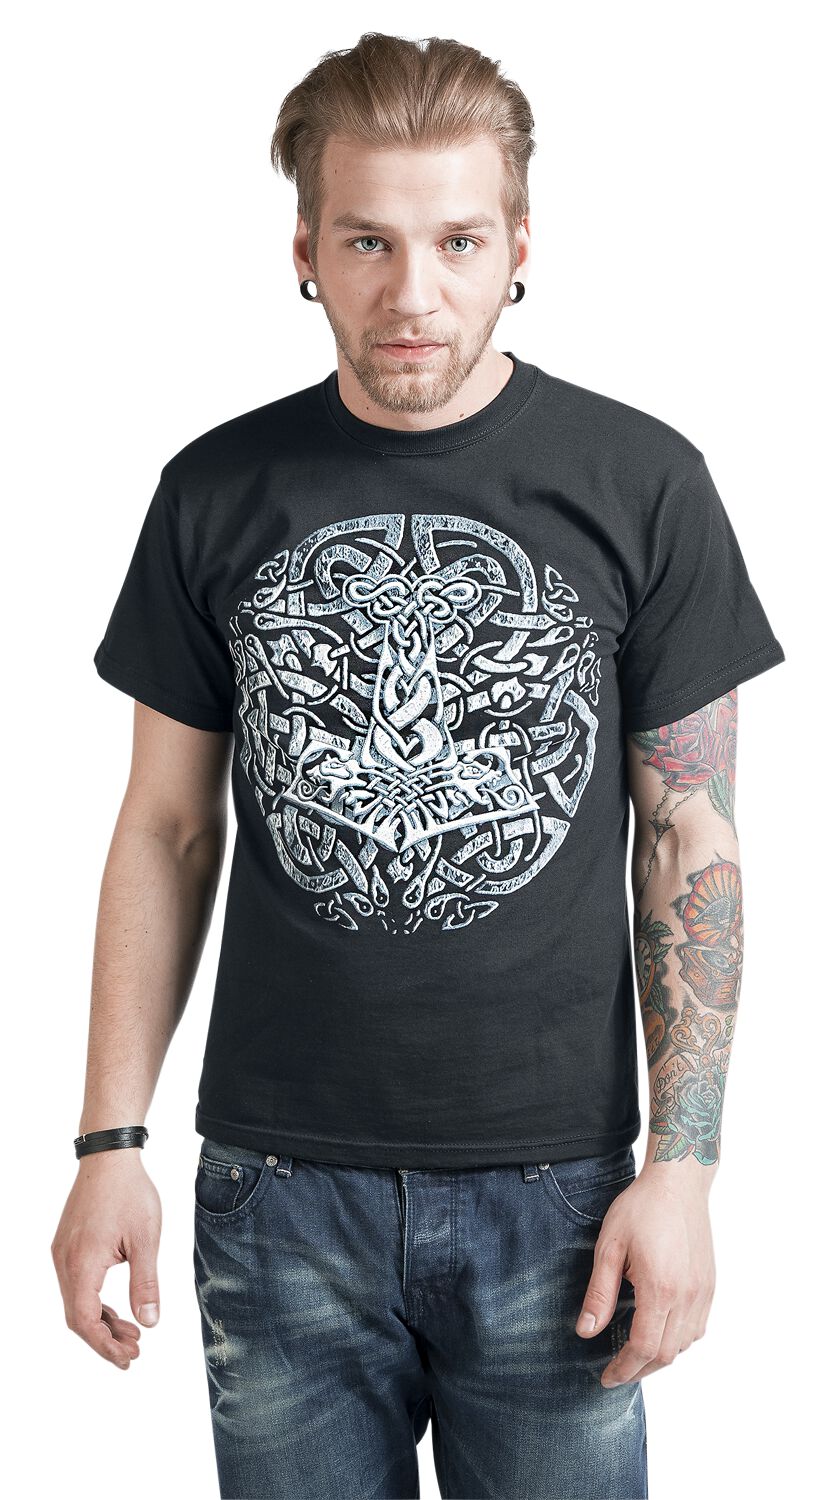 Celtic Thorhammer T-Shirt | EMP